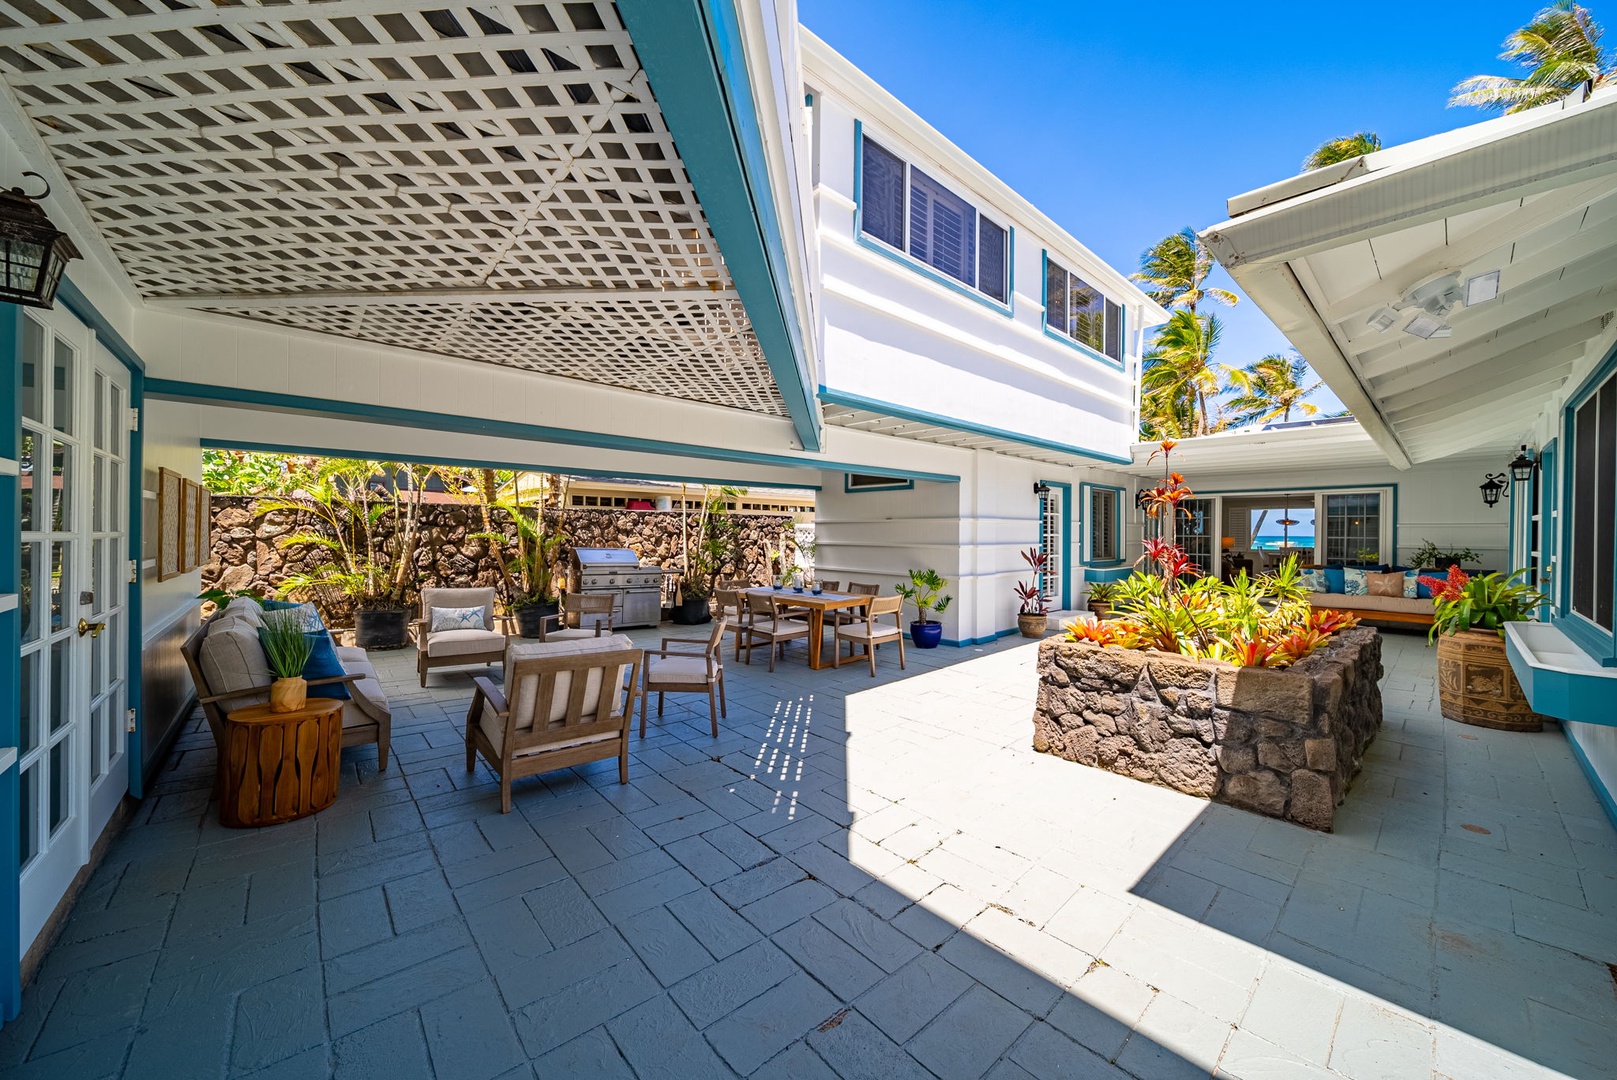 Waimanalo Vacation Rentals, Mana Kai at Waimanalo - Center courtyard lounge with alfresco dining option